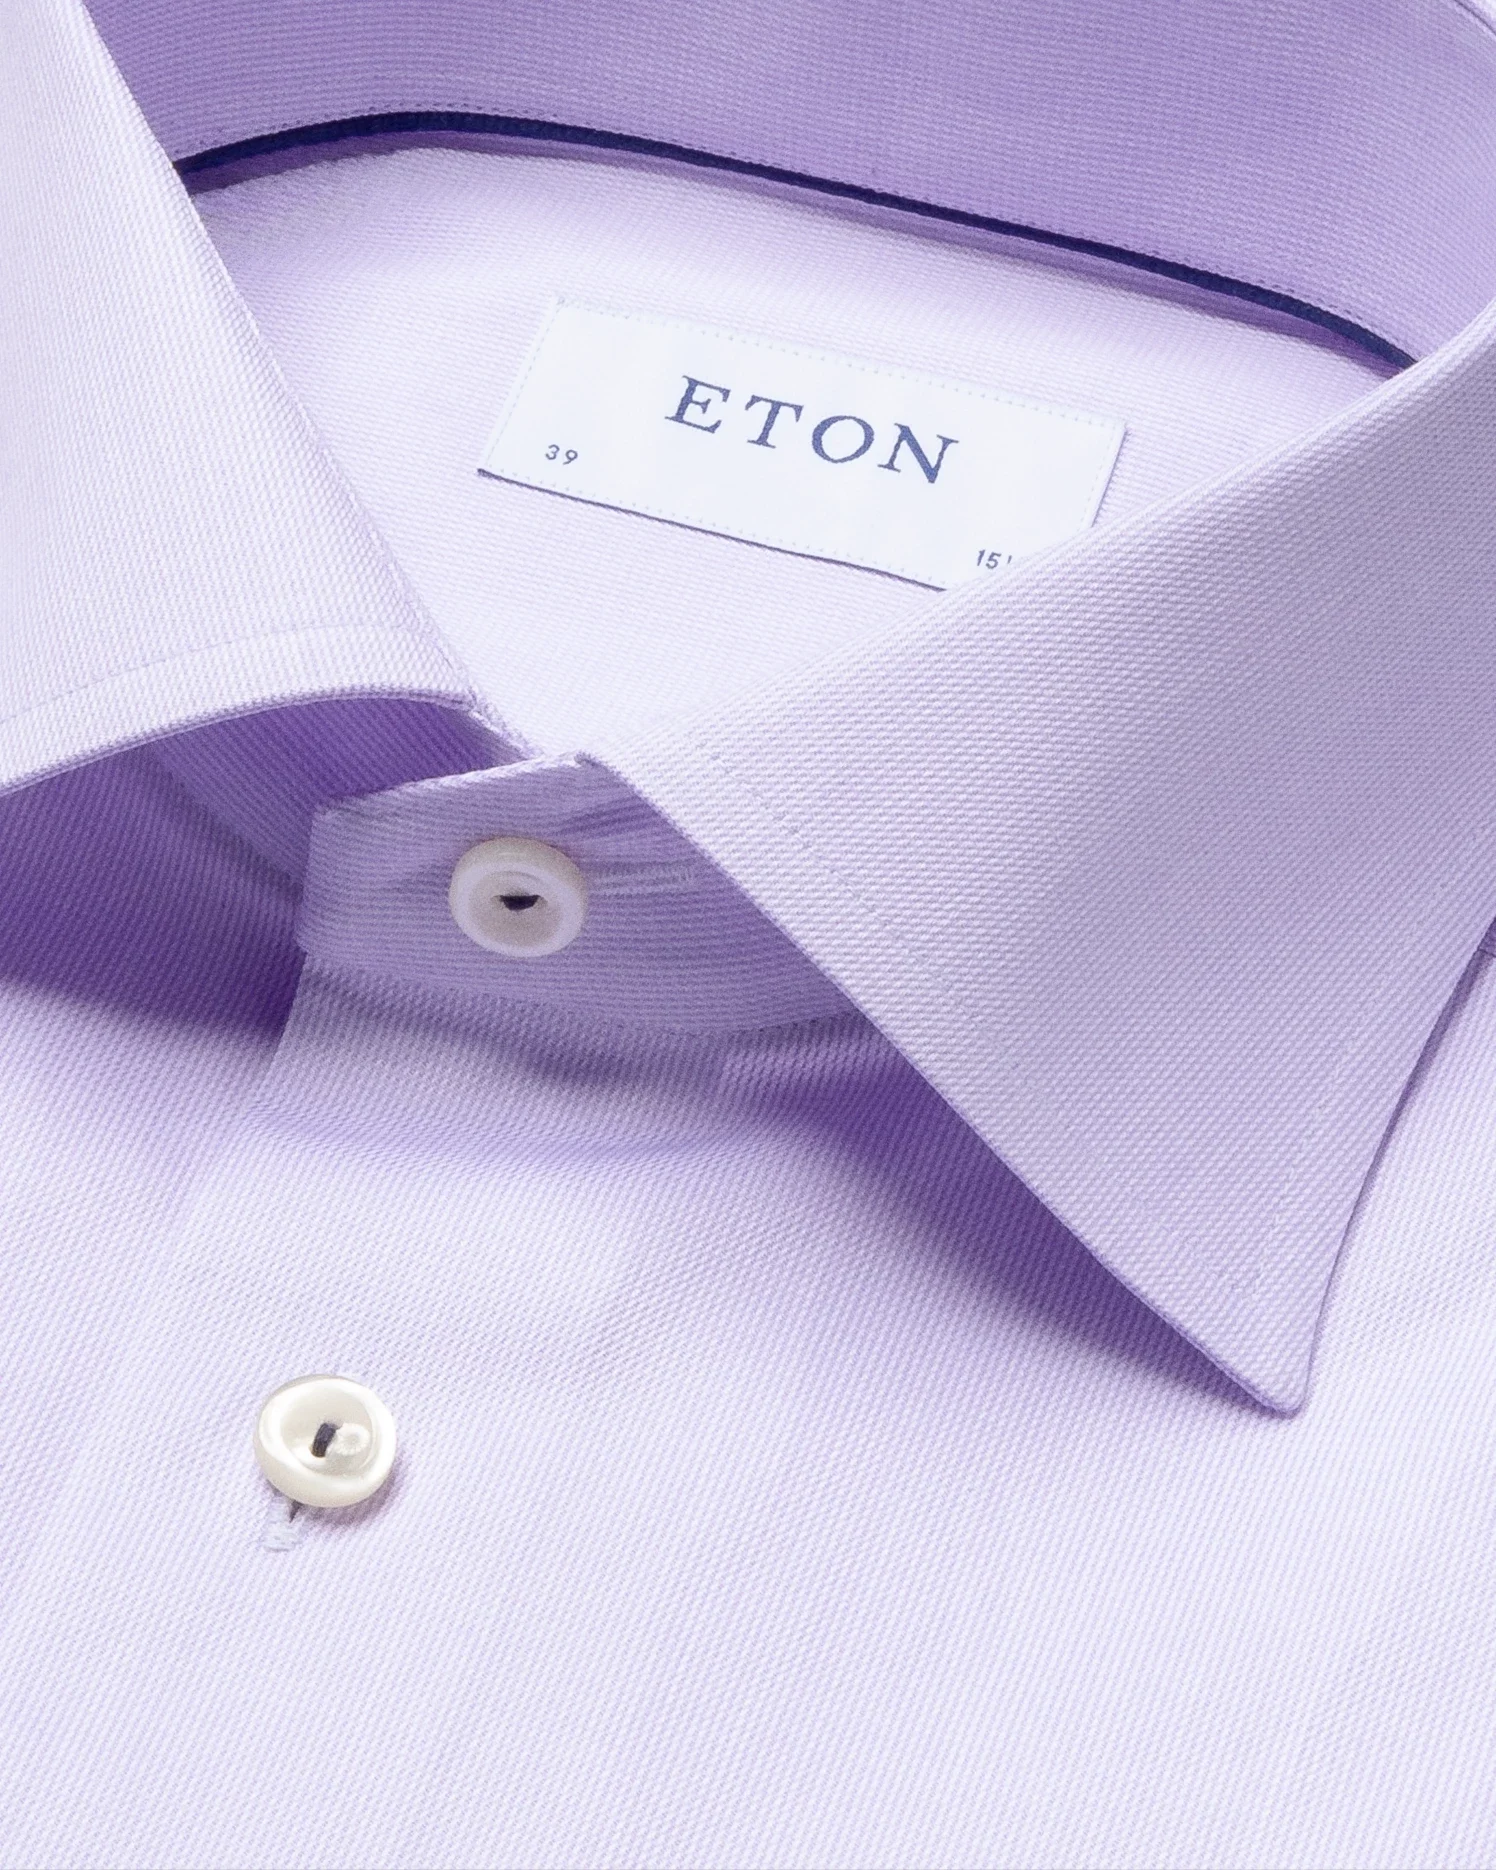 Eton - purple royal twill shirt cut away